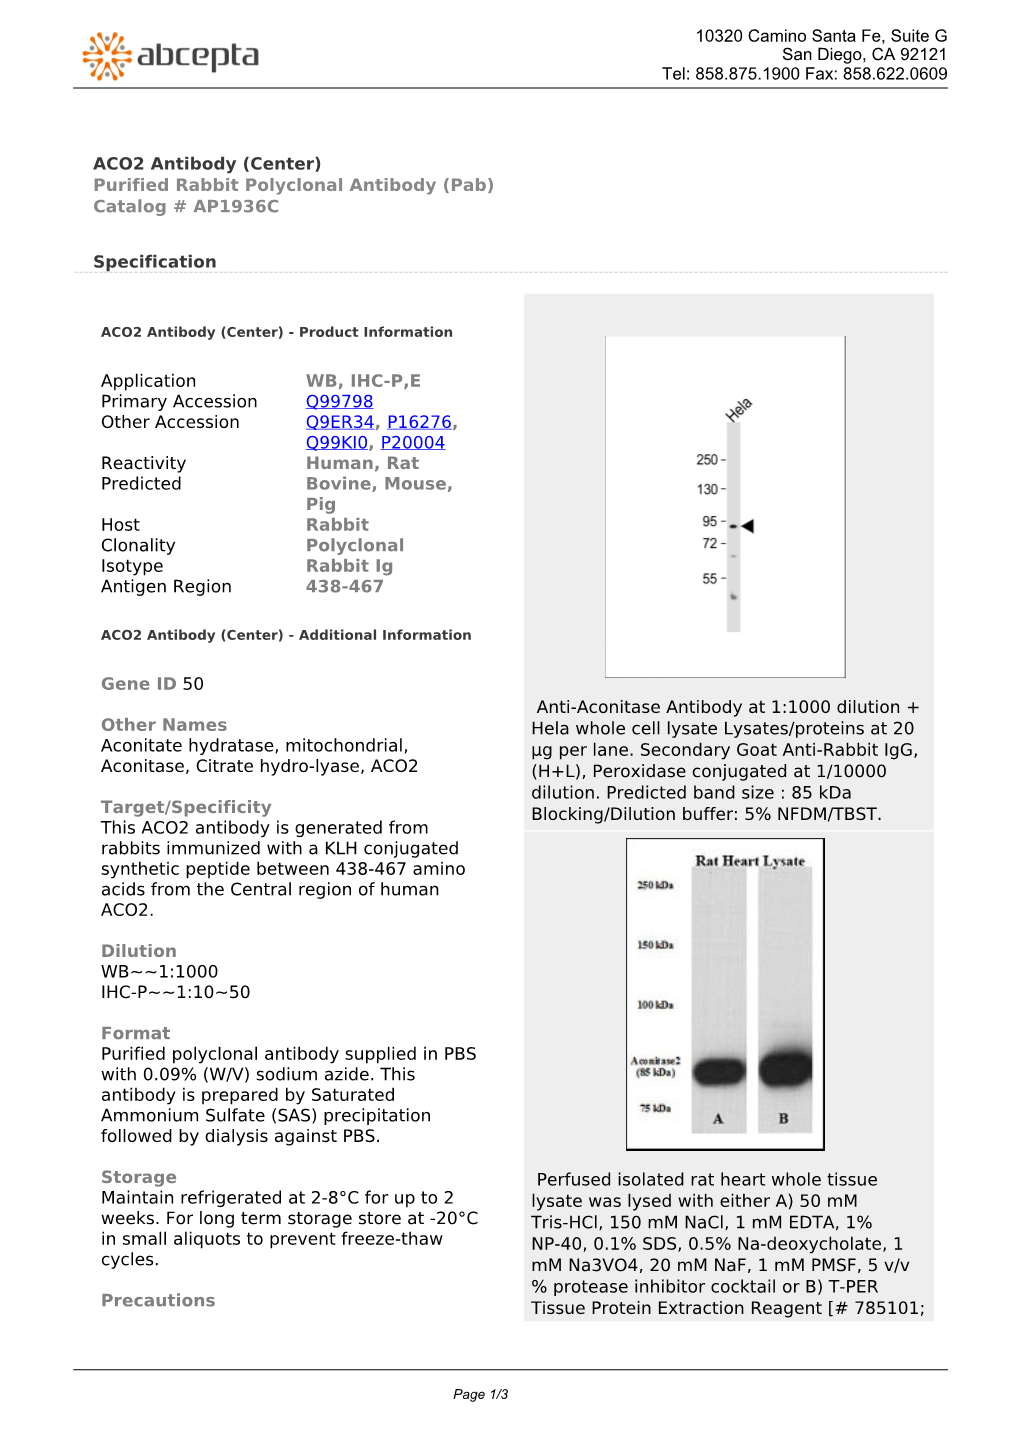 ACO2 Antibody (Center) Purified Rabbit Polyclonal Antibody (Pab) Catalog # AP1936C